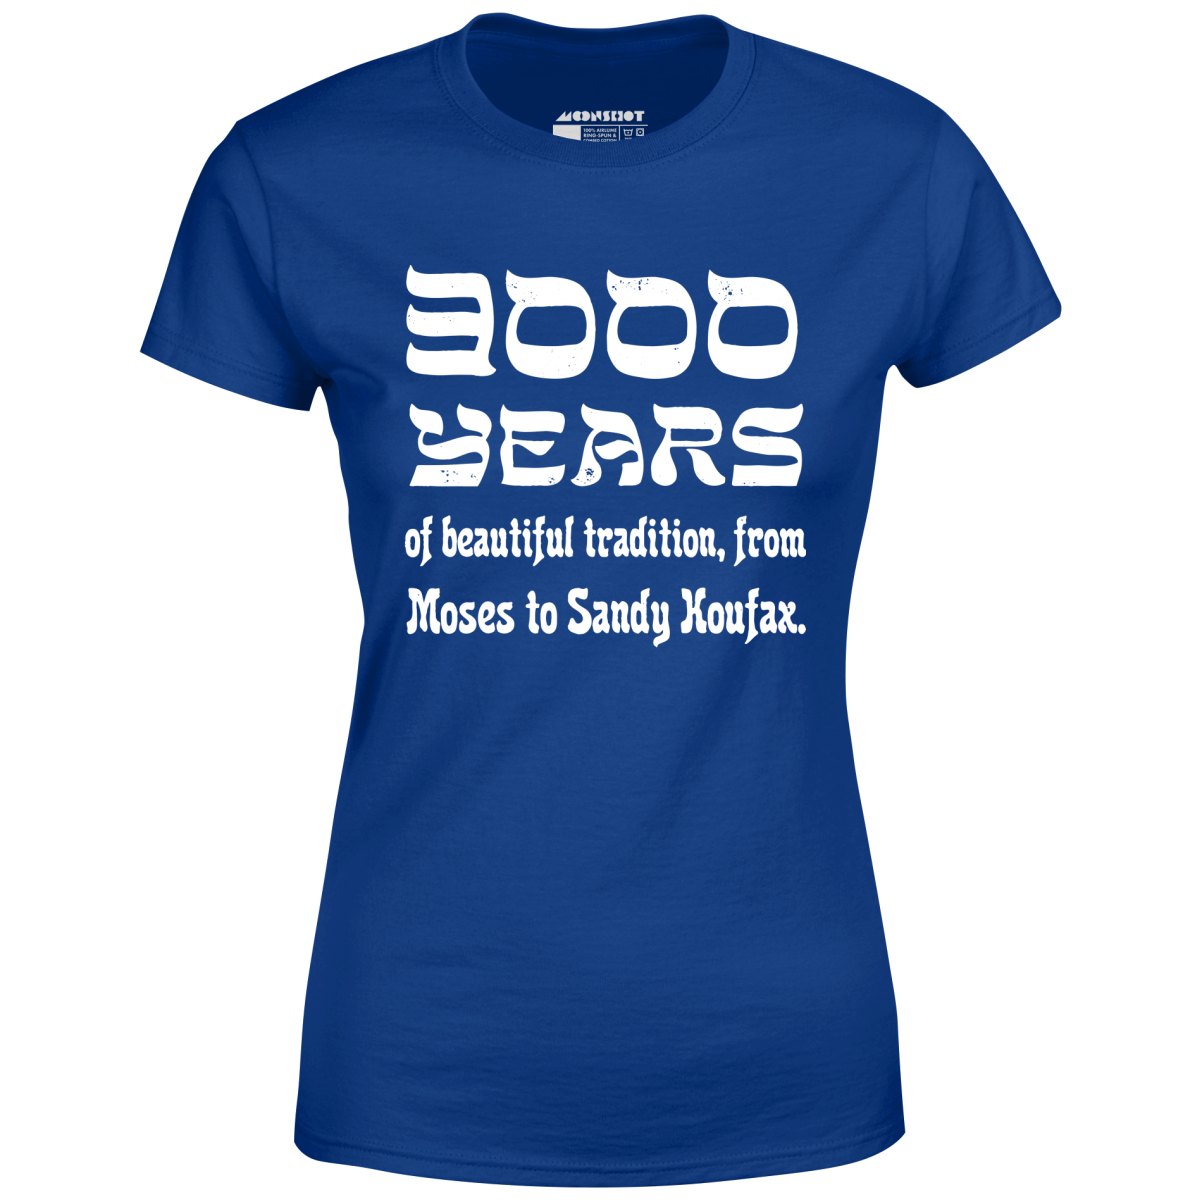 3000 Years of Beautiful Tradition - Big Lebowski - Women's T-Shirt